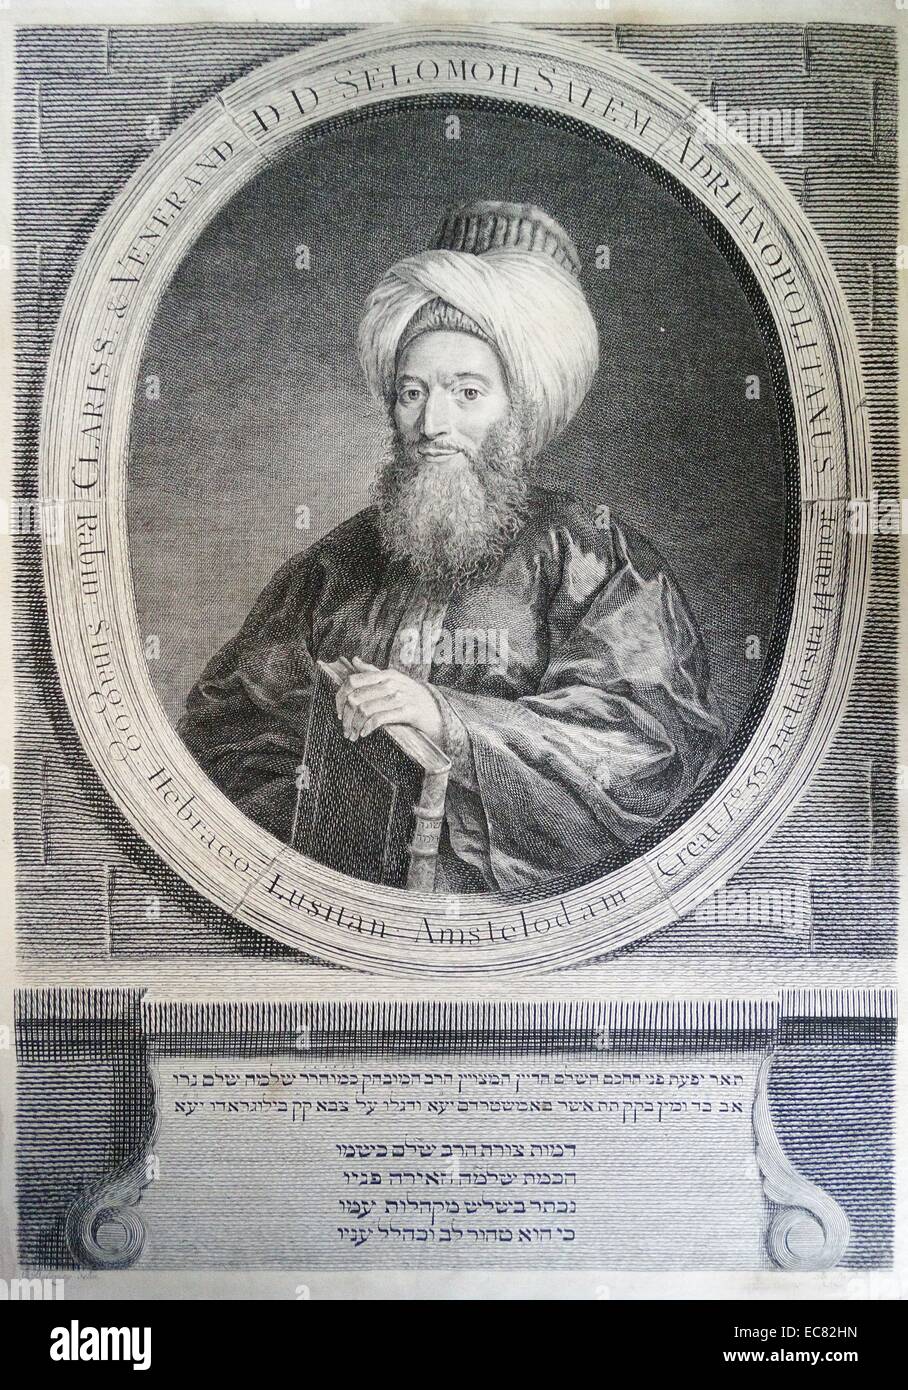 portrait of Rabbi Shlomo Salem 1718-1781, an important (Turkish born) leader of the Sephardi community of Jews in Amsterdam in the 18th century Stock Photo